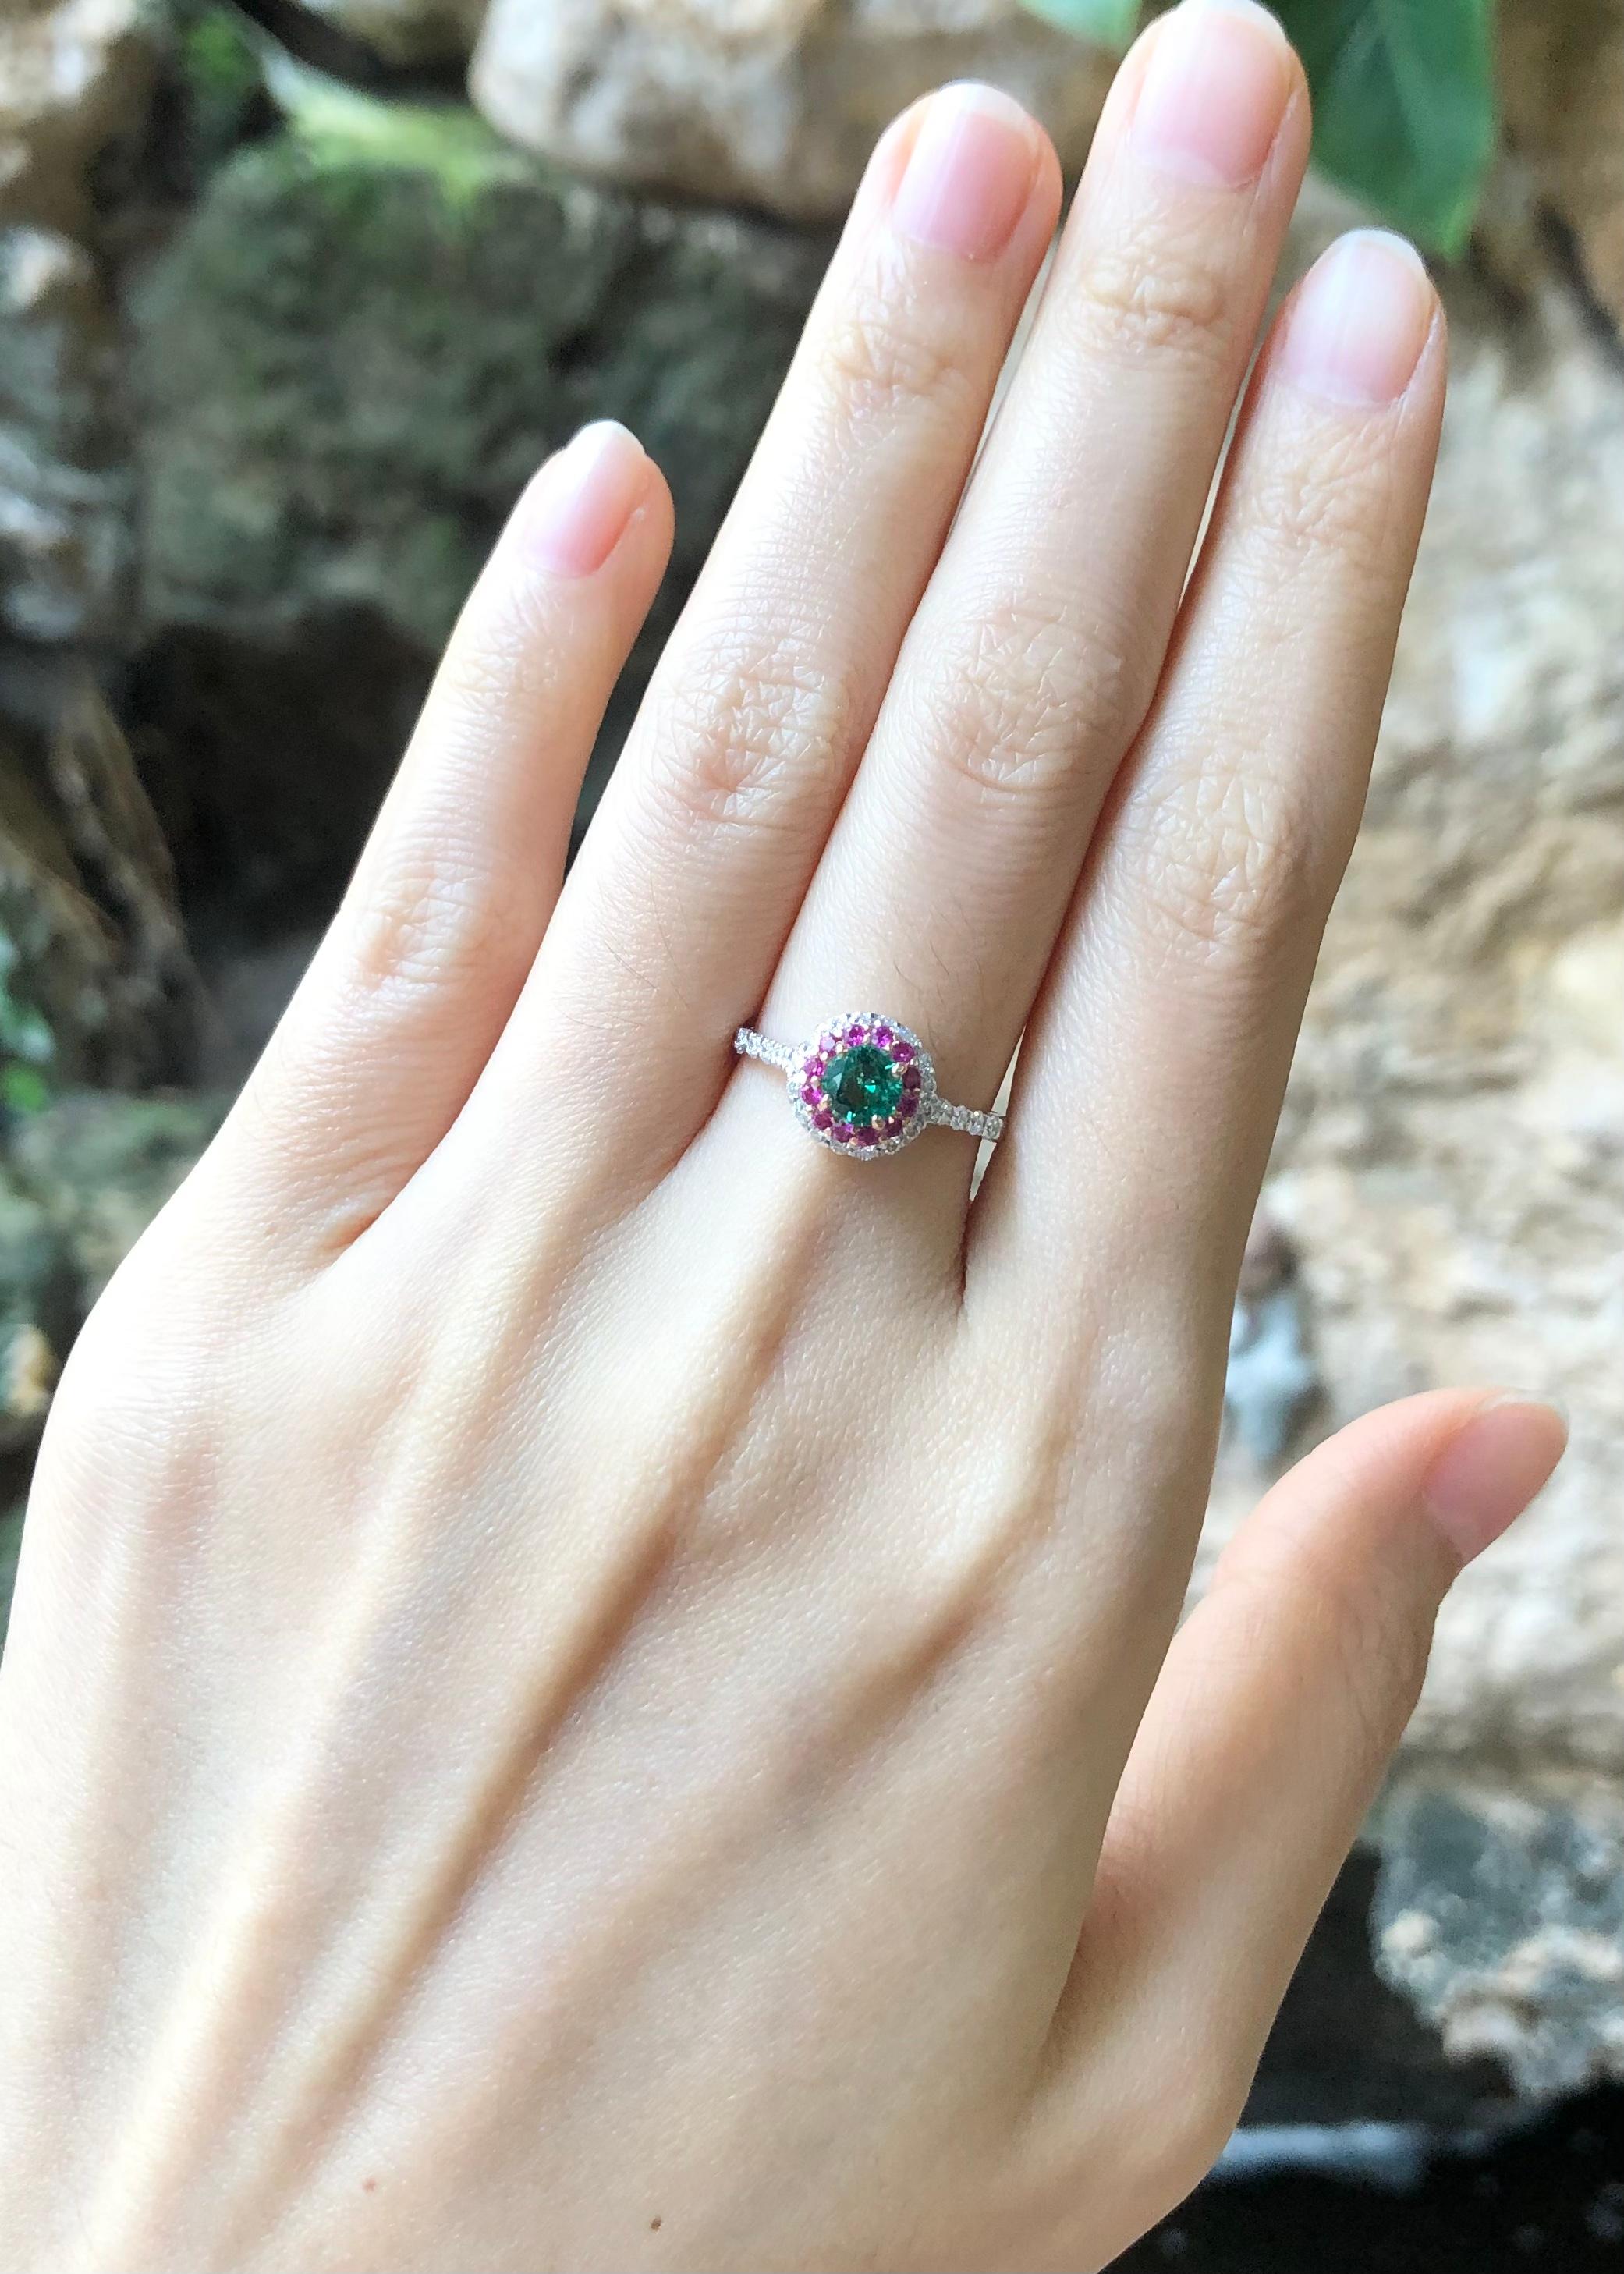 Emerald 0.46 carat, Pink Sapphire 0.19 carat and Diamond 0.28 carat Ring set in 18 Karat White Gold Settings

Width:  0.9 cm 
Length: 0.9 cm
Ring Size: 52
Total Weight: 2.63 grams



